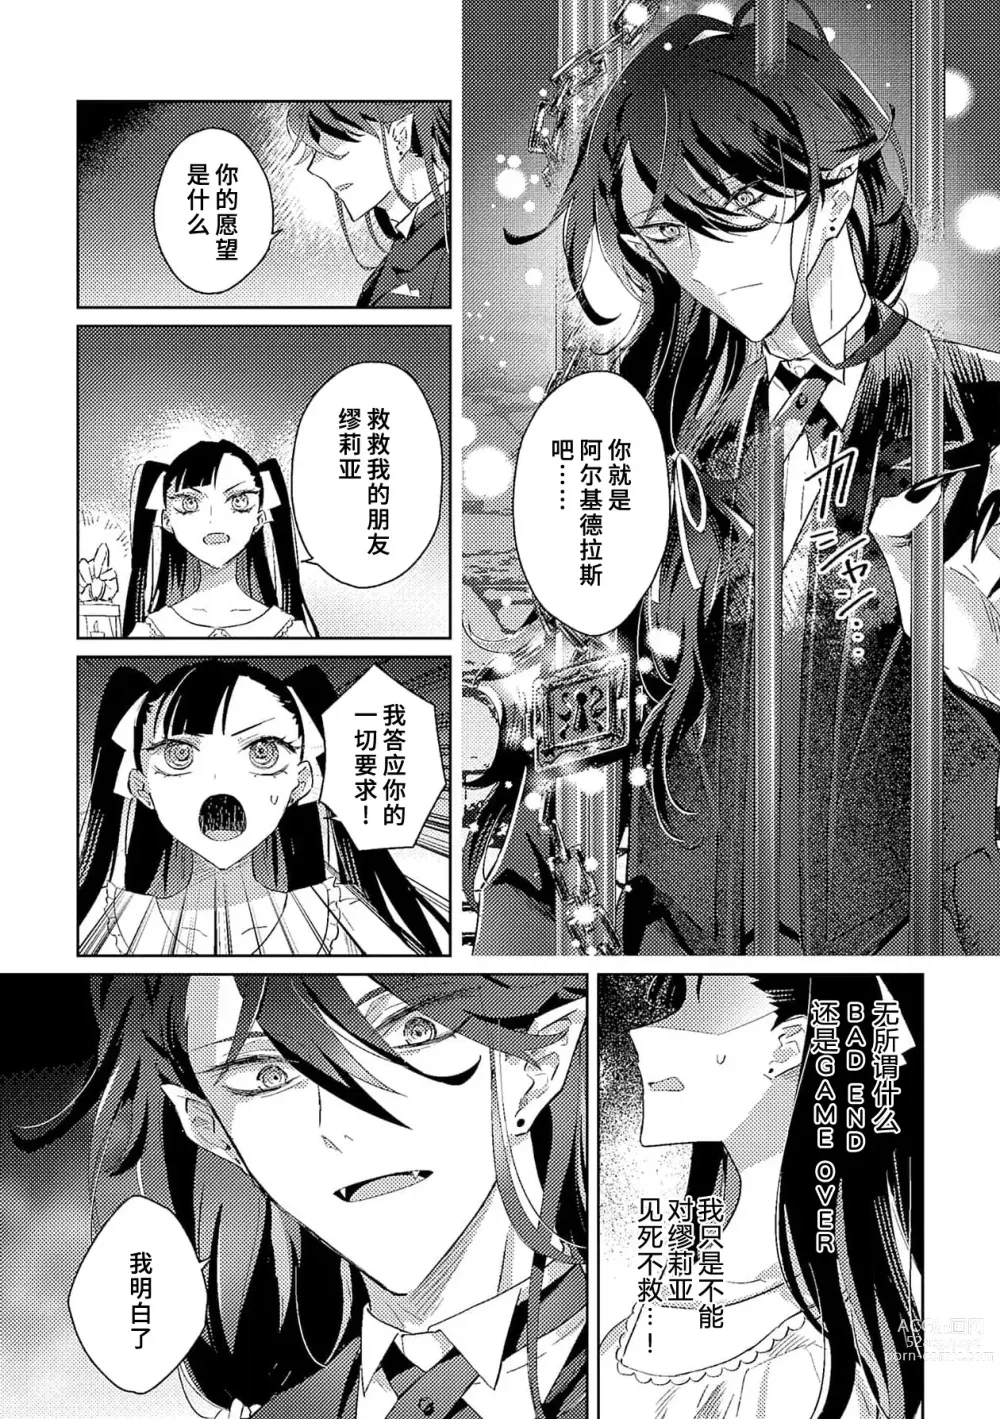 Page 12 of manga 身为恶役千金，堕落于魔界王子身下这条路线真的可以有？ 1-4